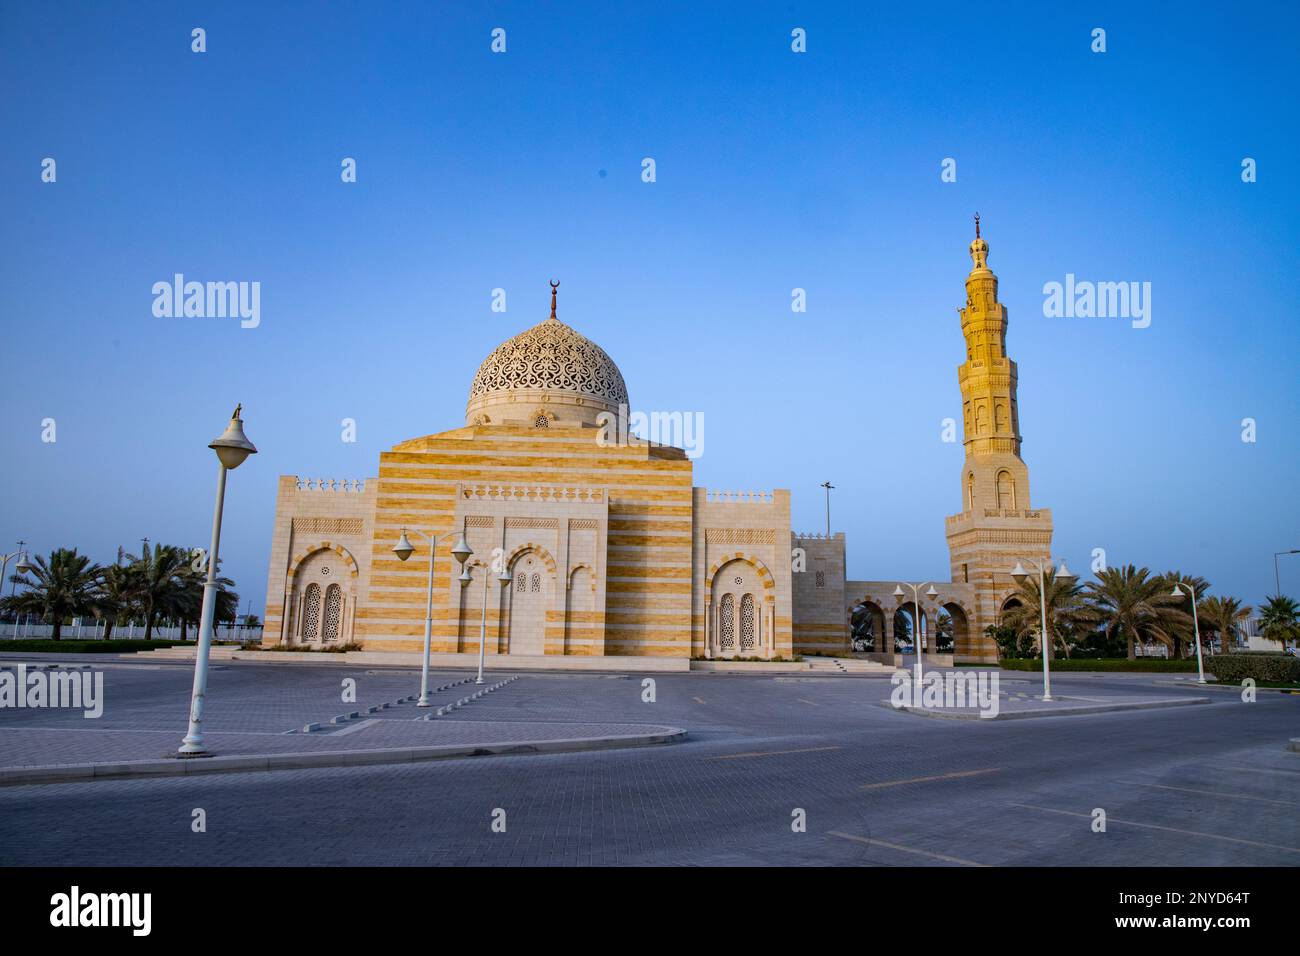 Shaikh Isa Bin Salman Al Khalifa Grand Mosque, Kingdom of Bahrain, Middle East. Stock Photo